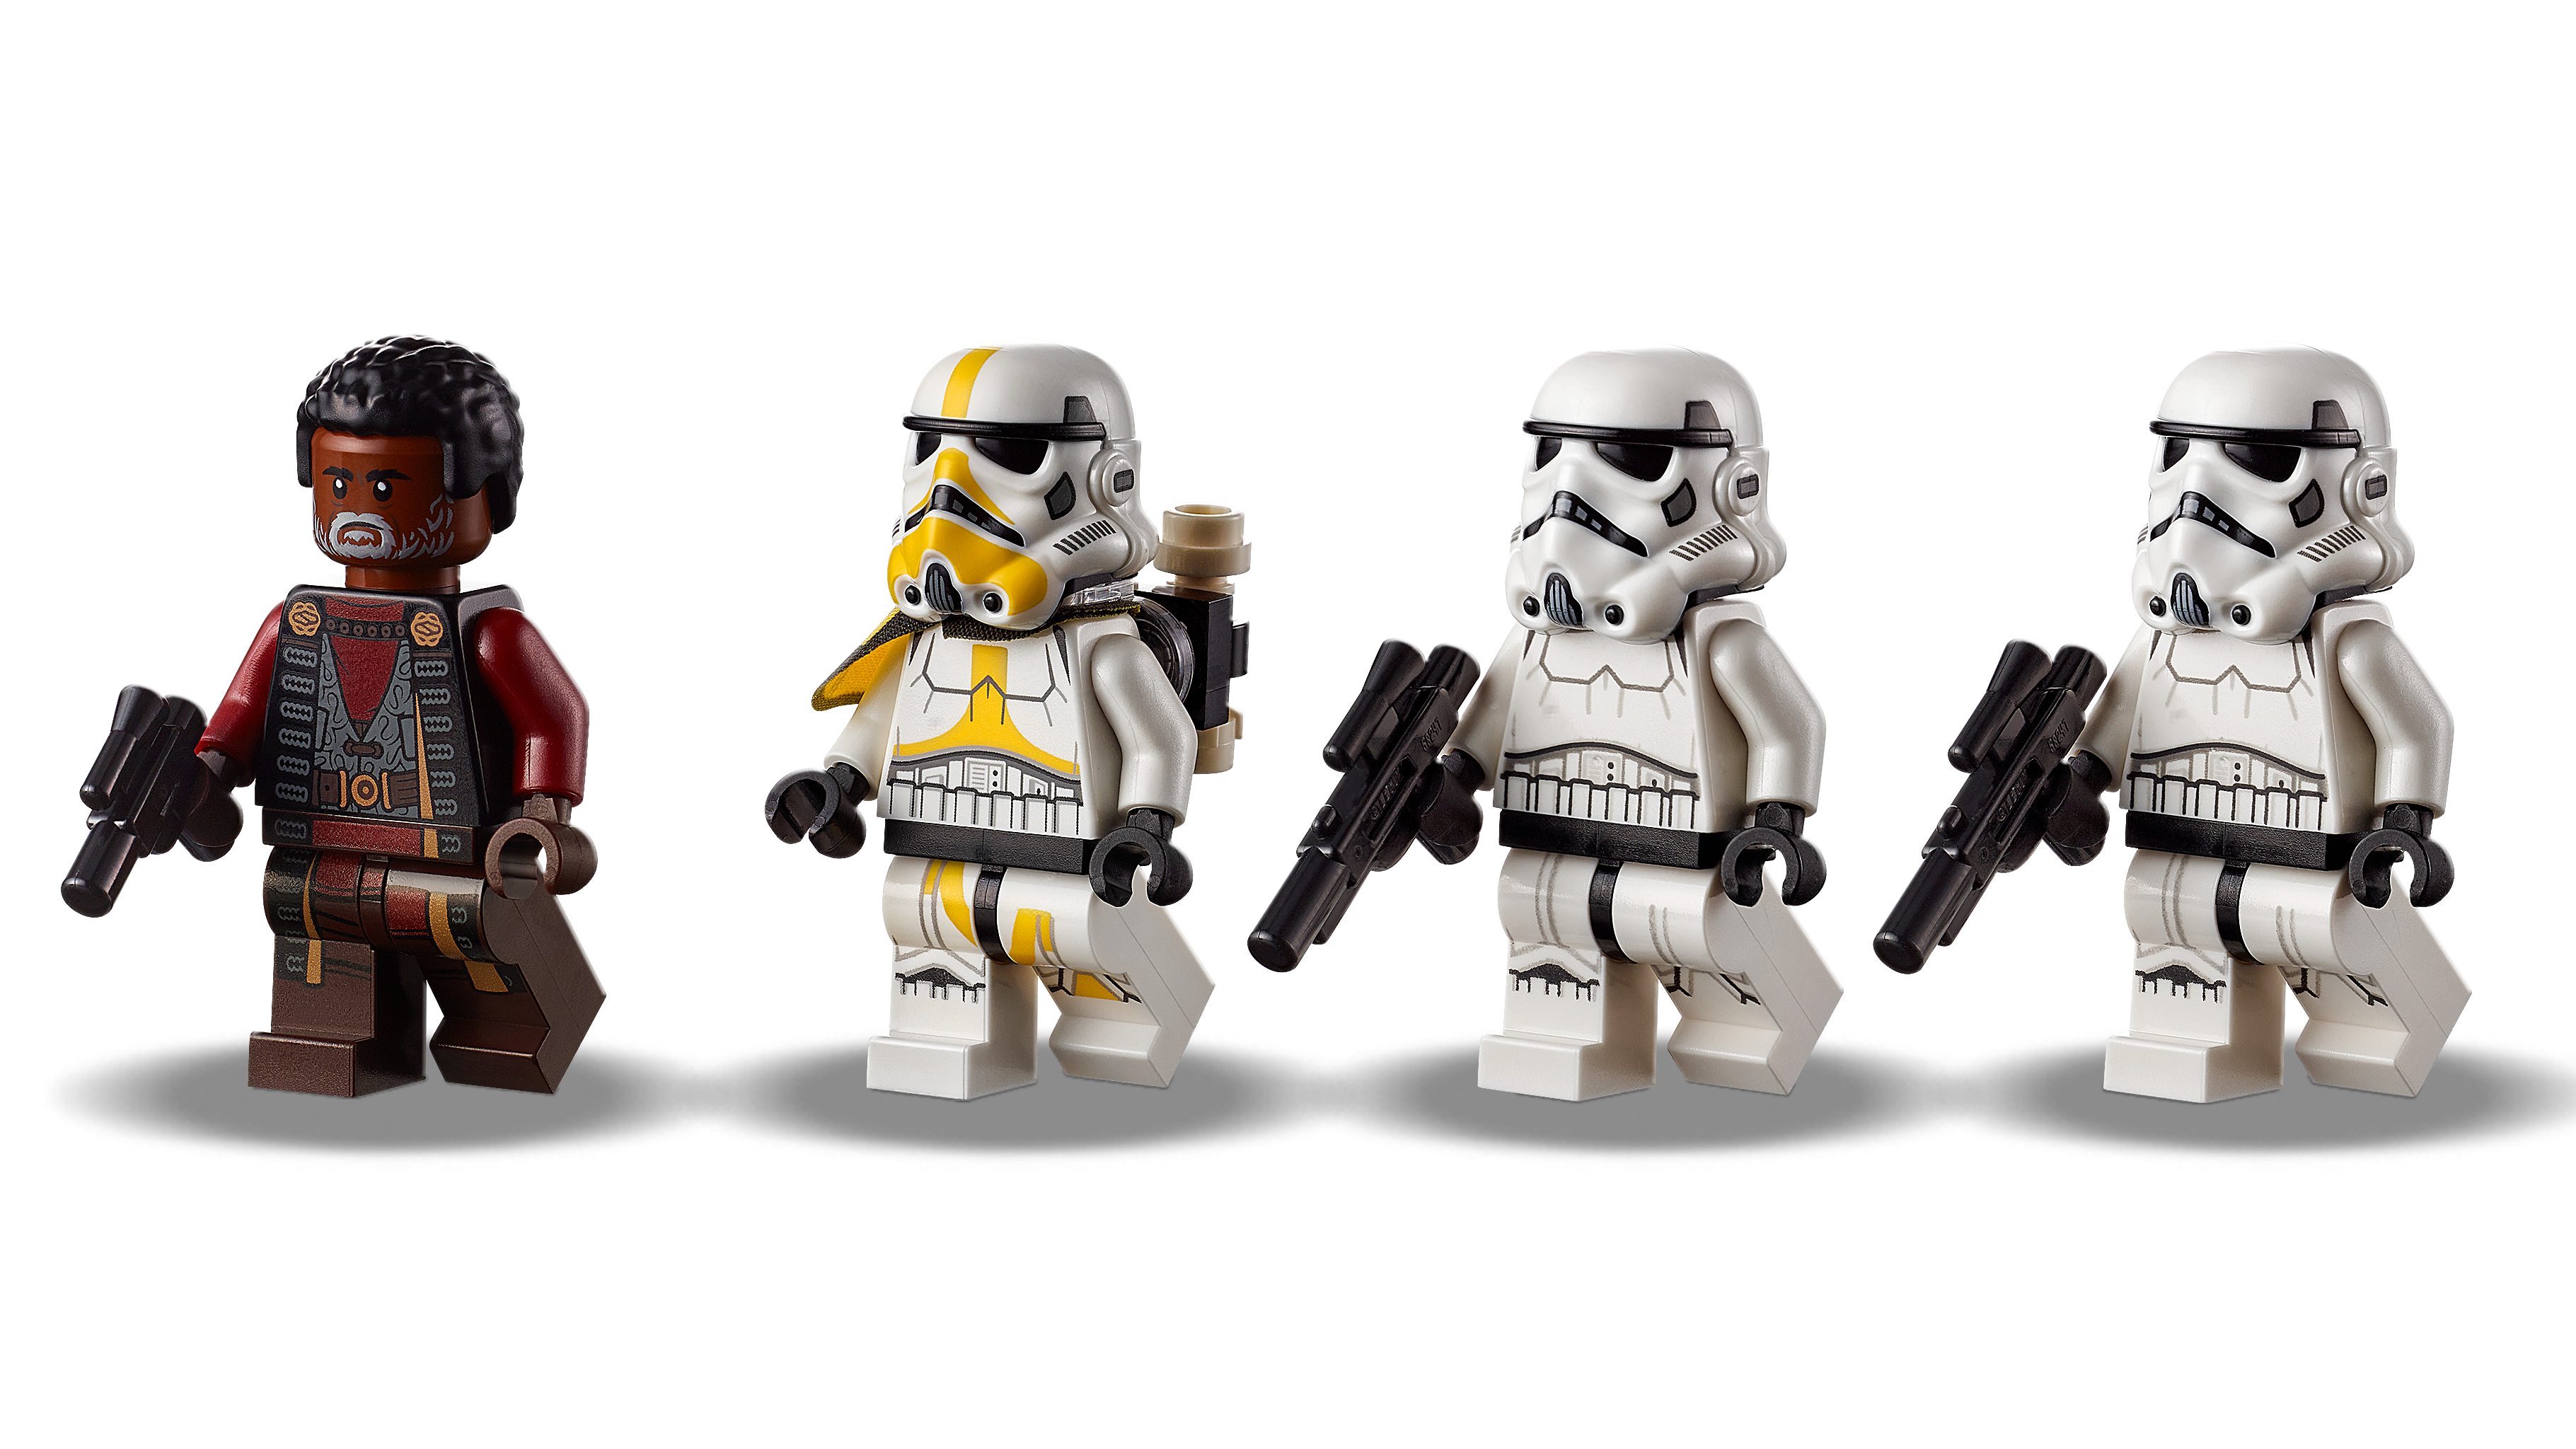 Lego Star Wars Artillery Stormtrooper minifigure from set 75311 